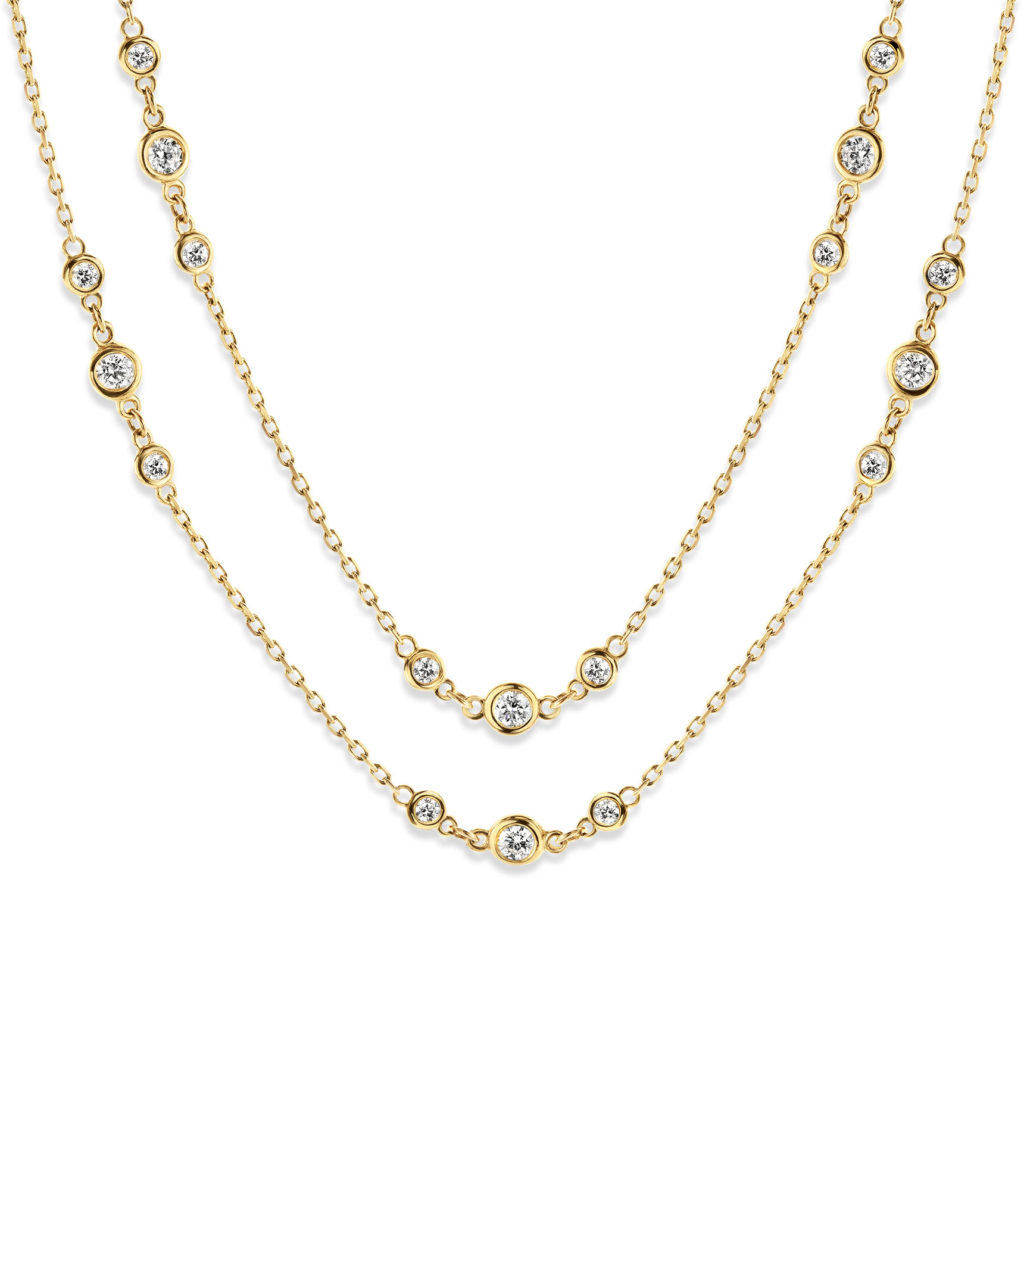 Bezel-Set Diamonds by the Yard Yellow Gold Chain Necklace - Turgeon Raine